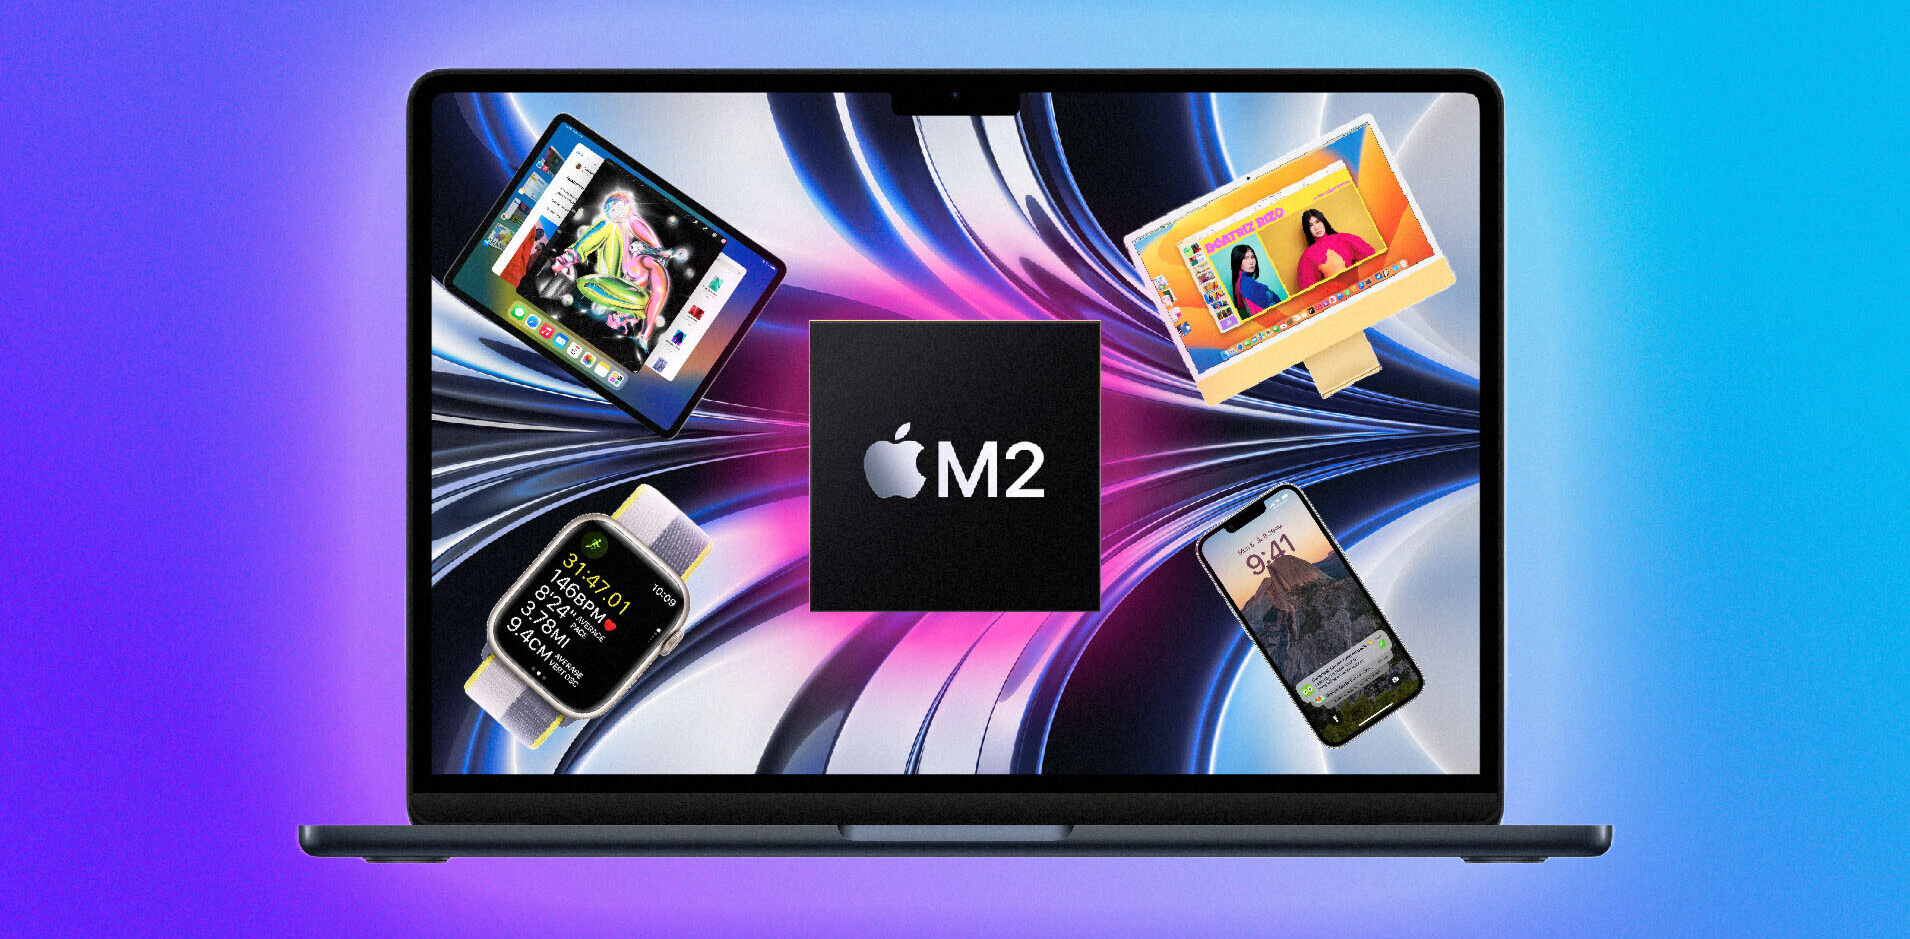 WWDC 2022: Apple announces M2 MacBook Air, iOS 16, and more